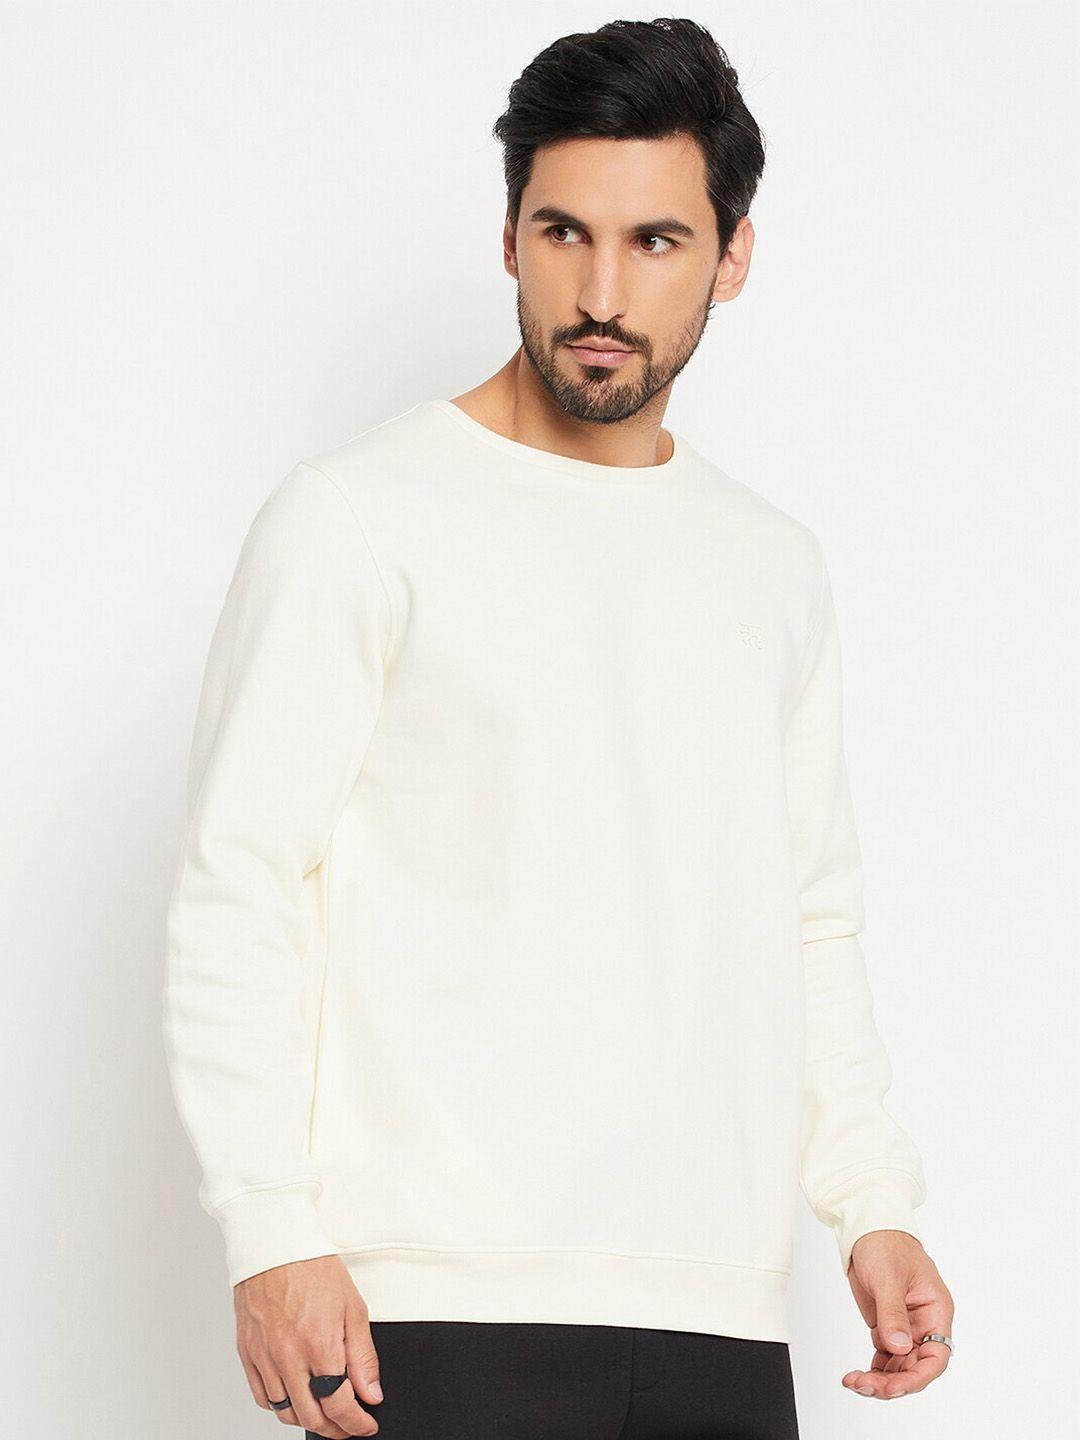 edrio round neck fleece pullover sweatshirt